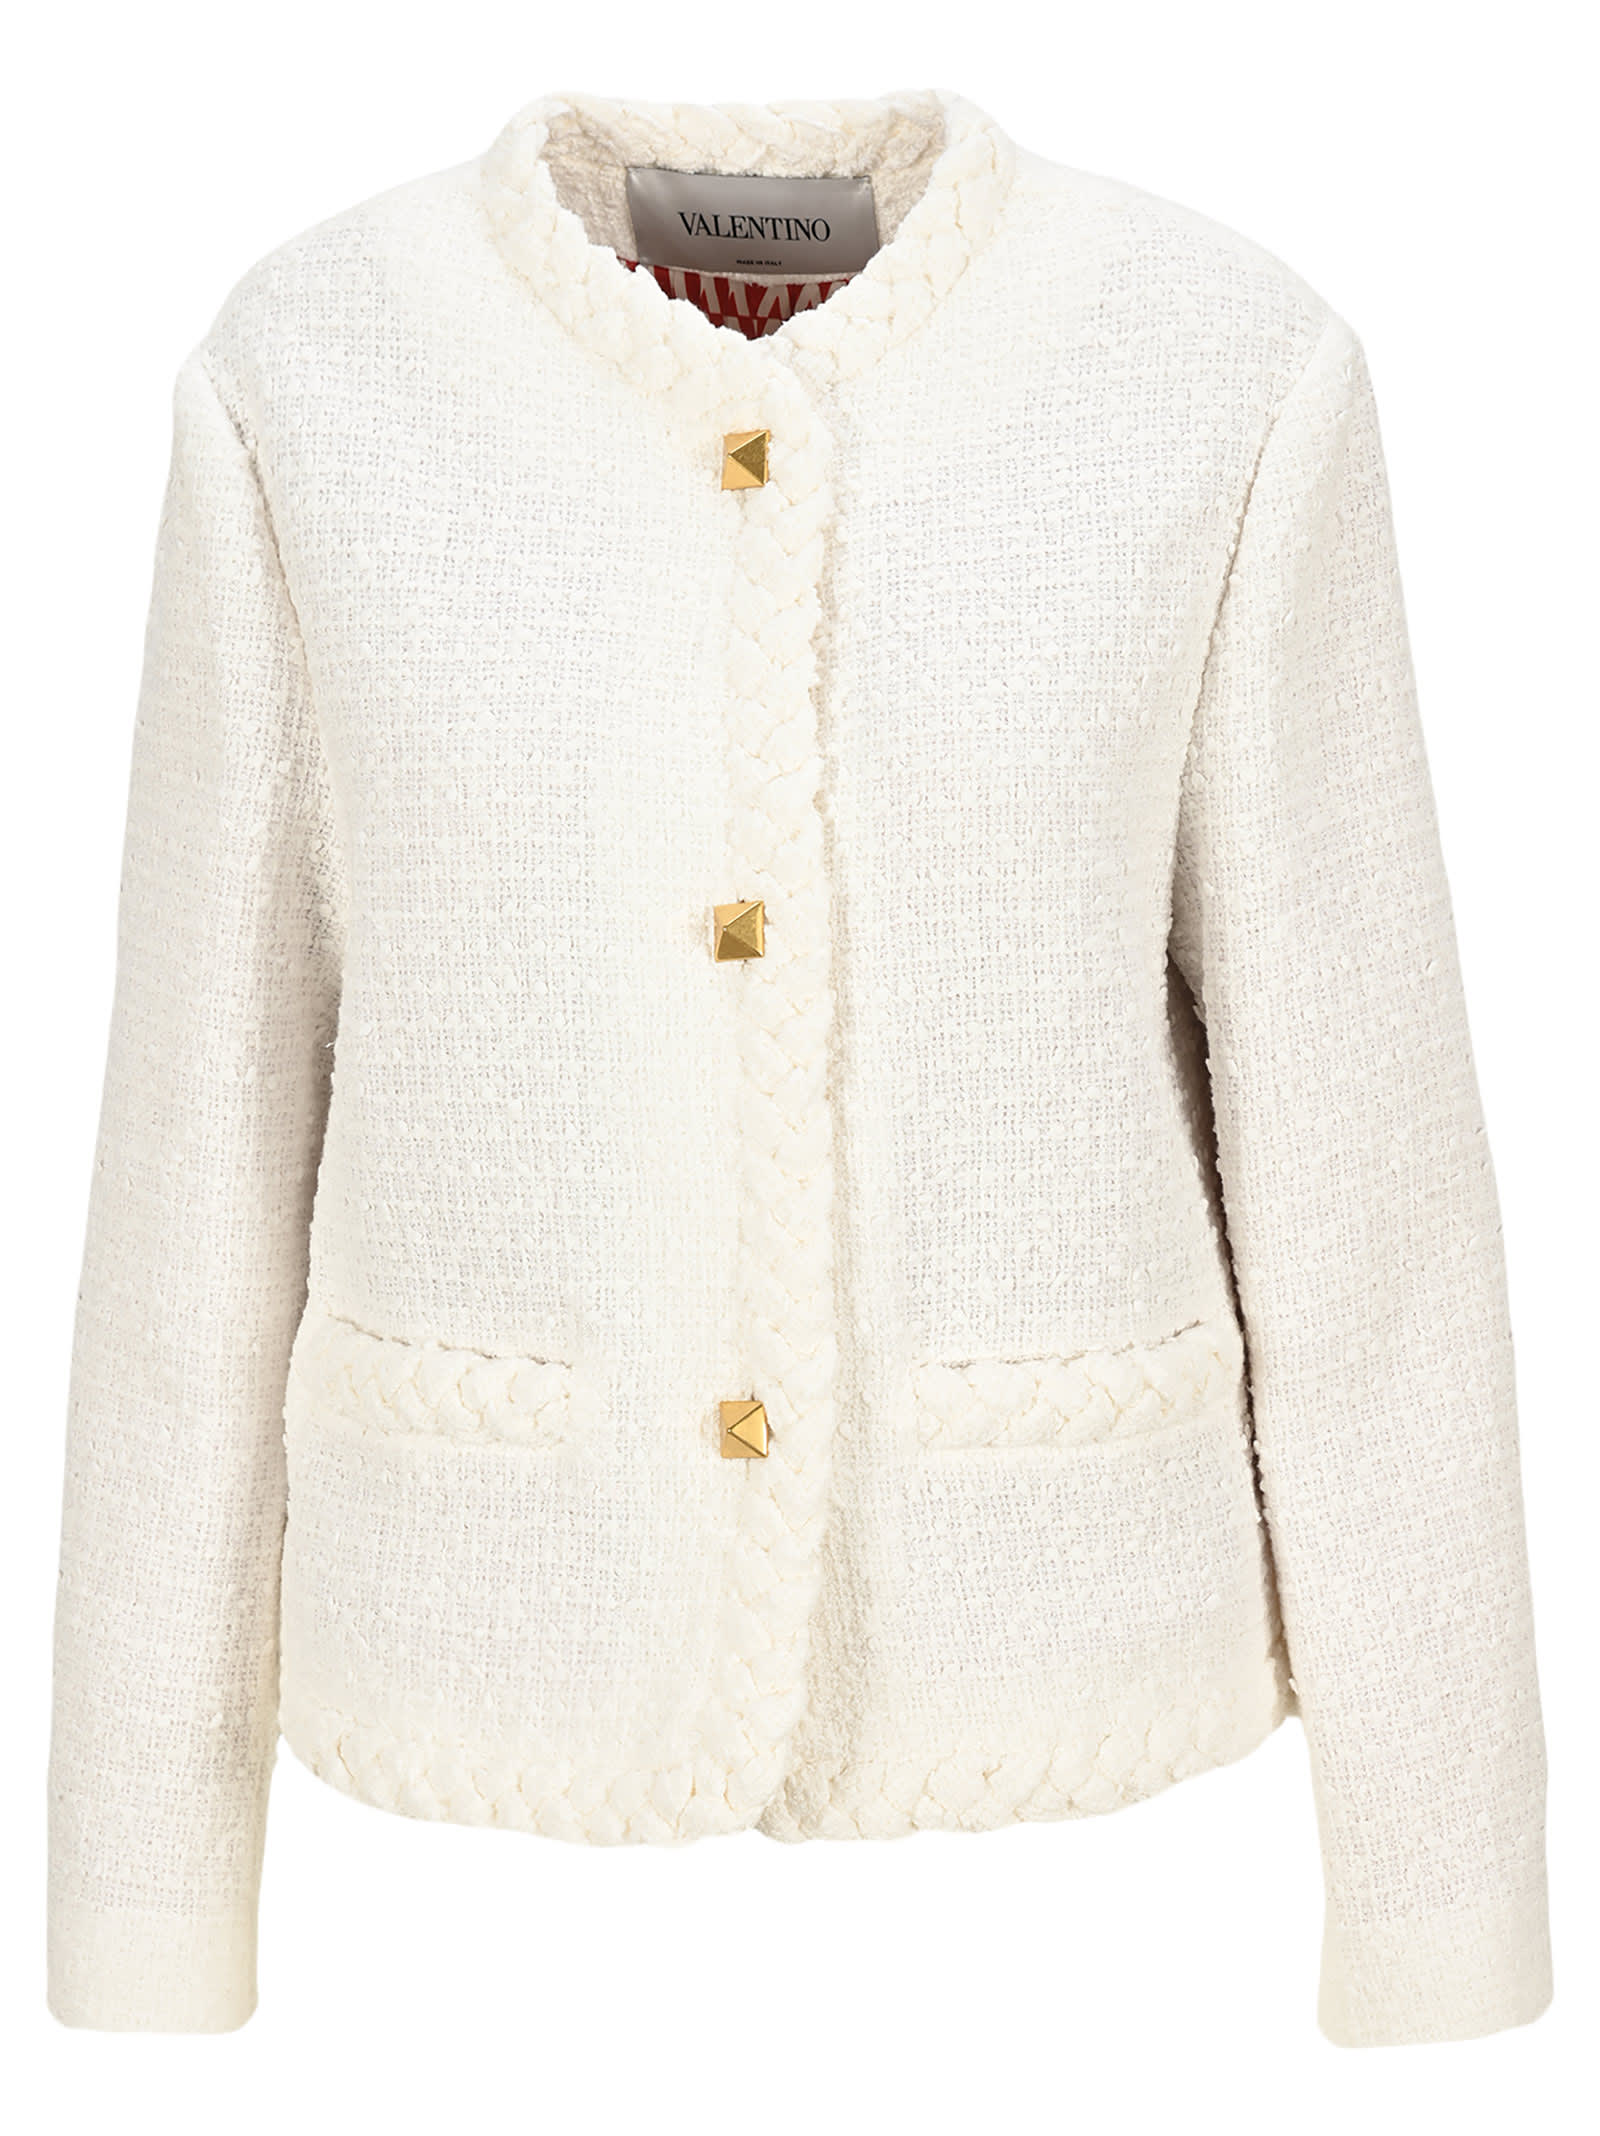 Valentino Cotton Tweed Jacket